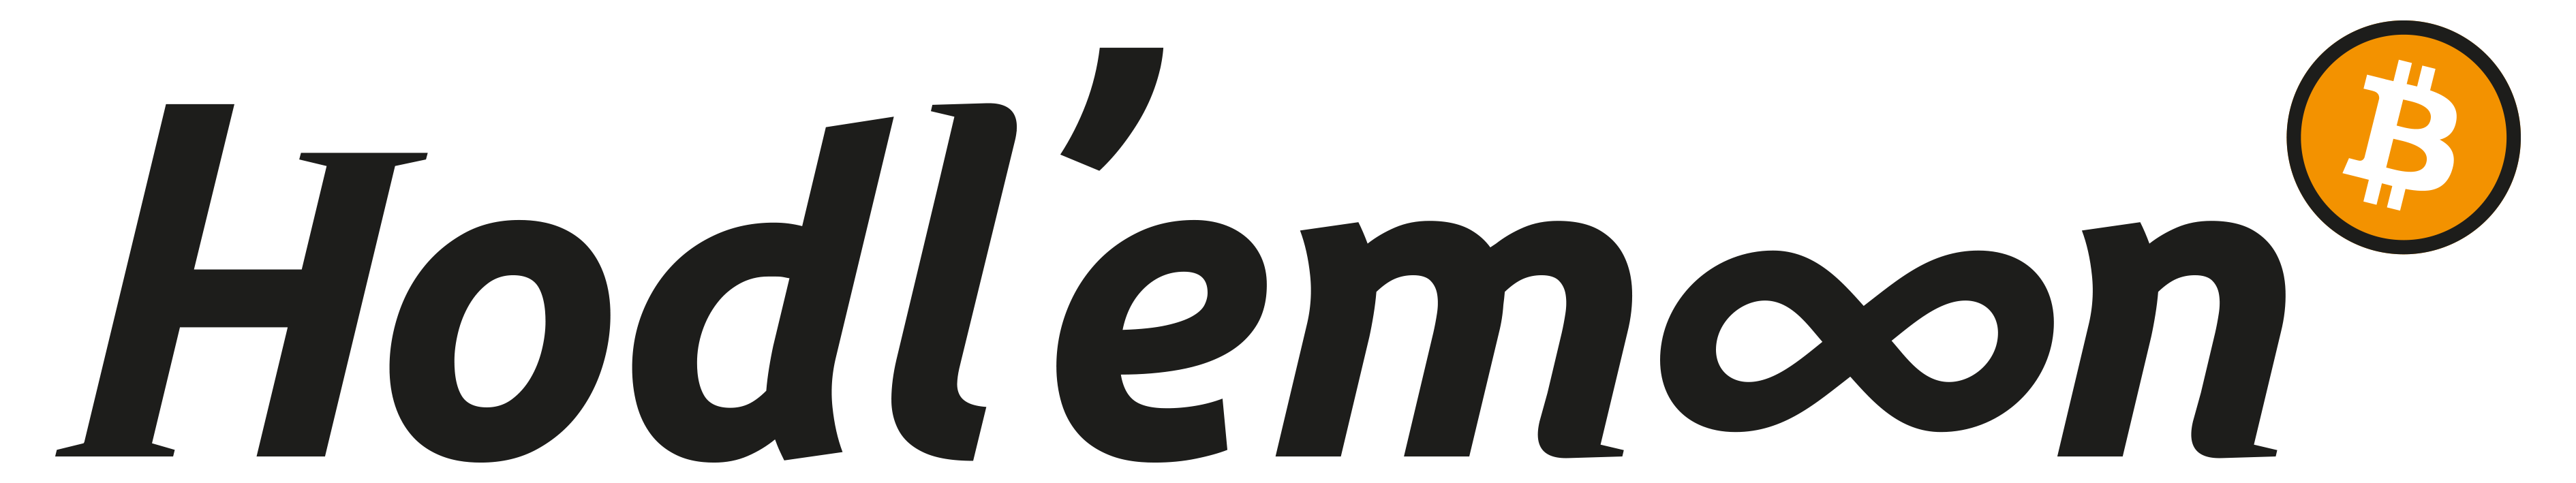 hodlemoon-boardgame-logo